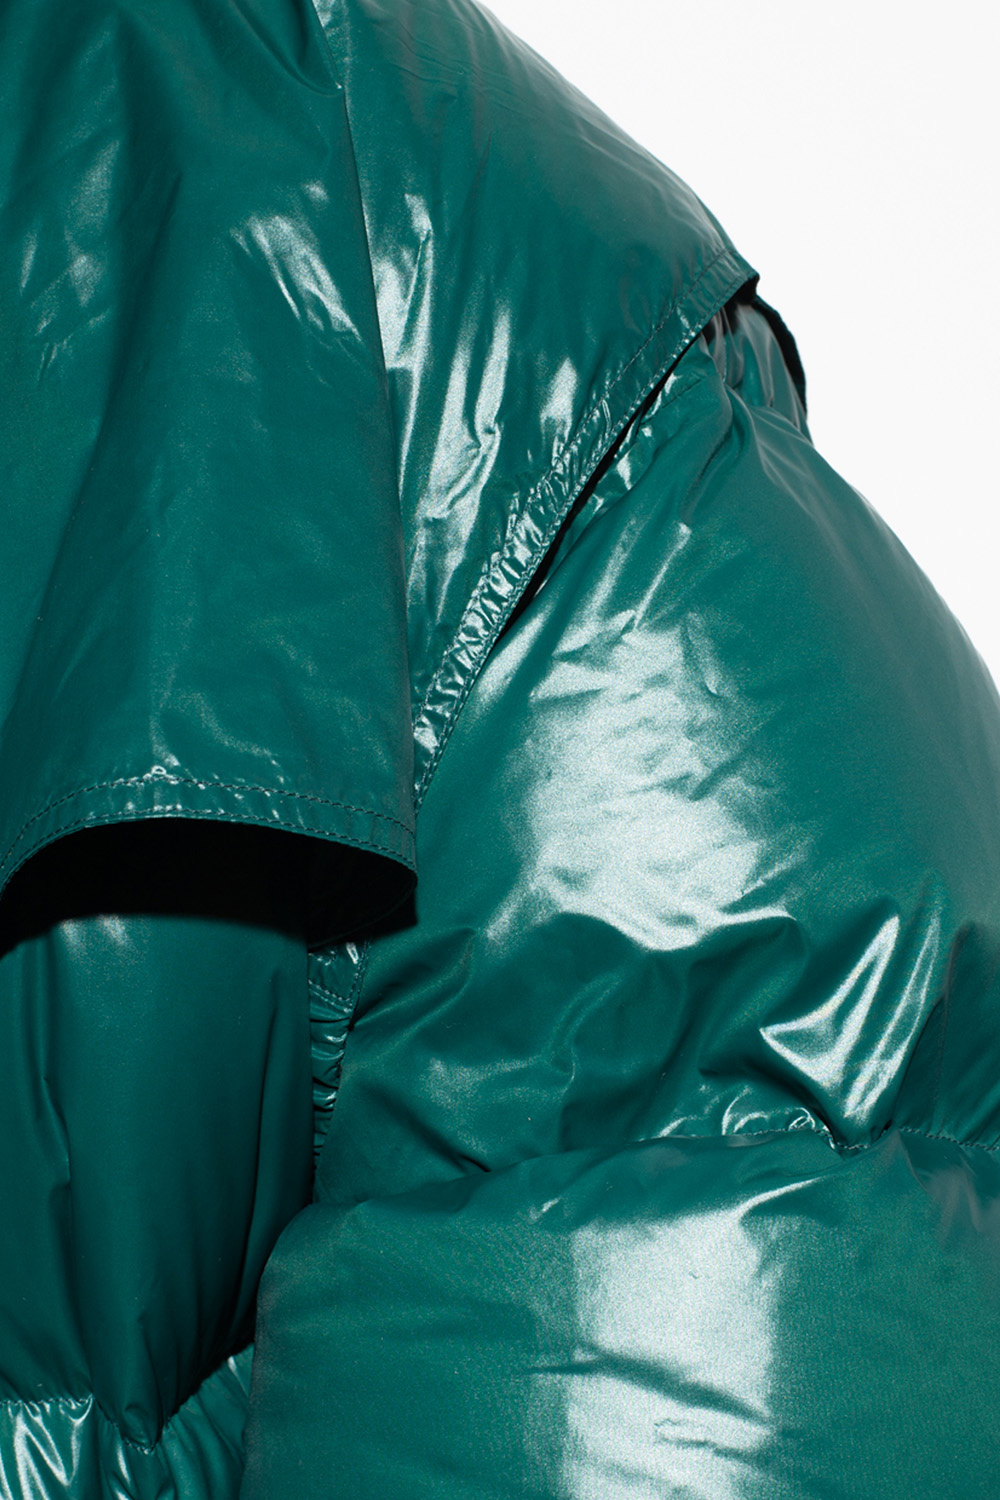 IetpShops KR - Green 'Loop' shoulder bag Bottega Veneta - trench coat with  decorative sleeves bottega veneta coat